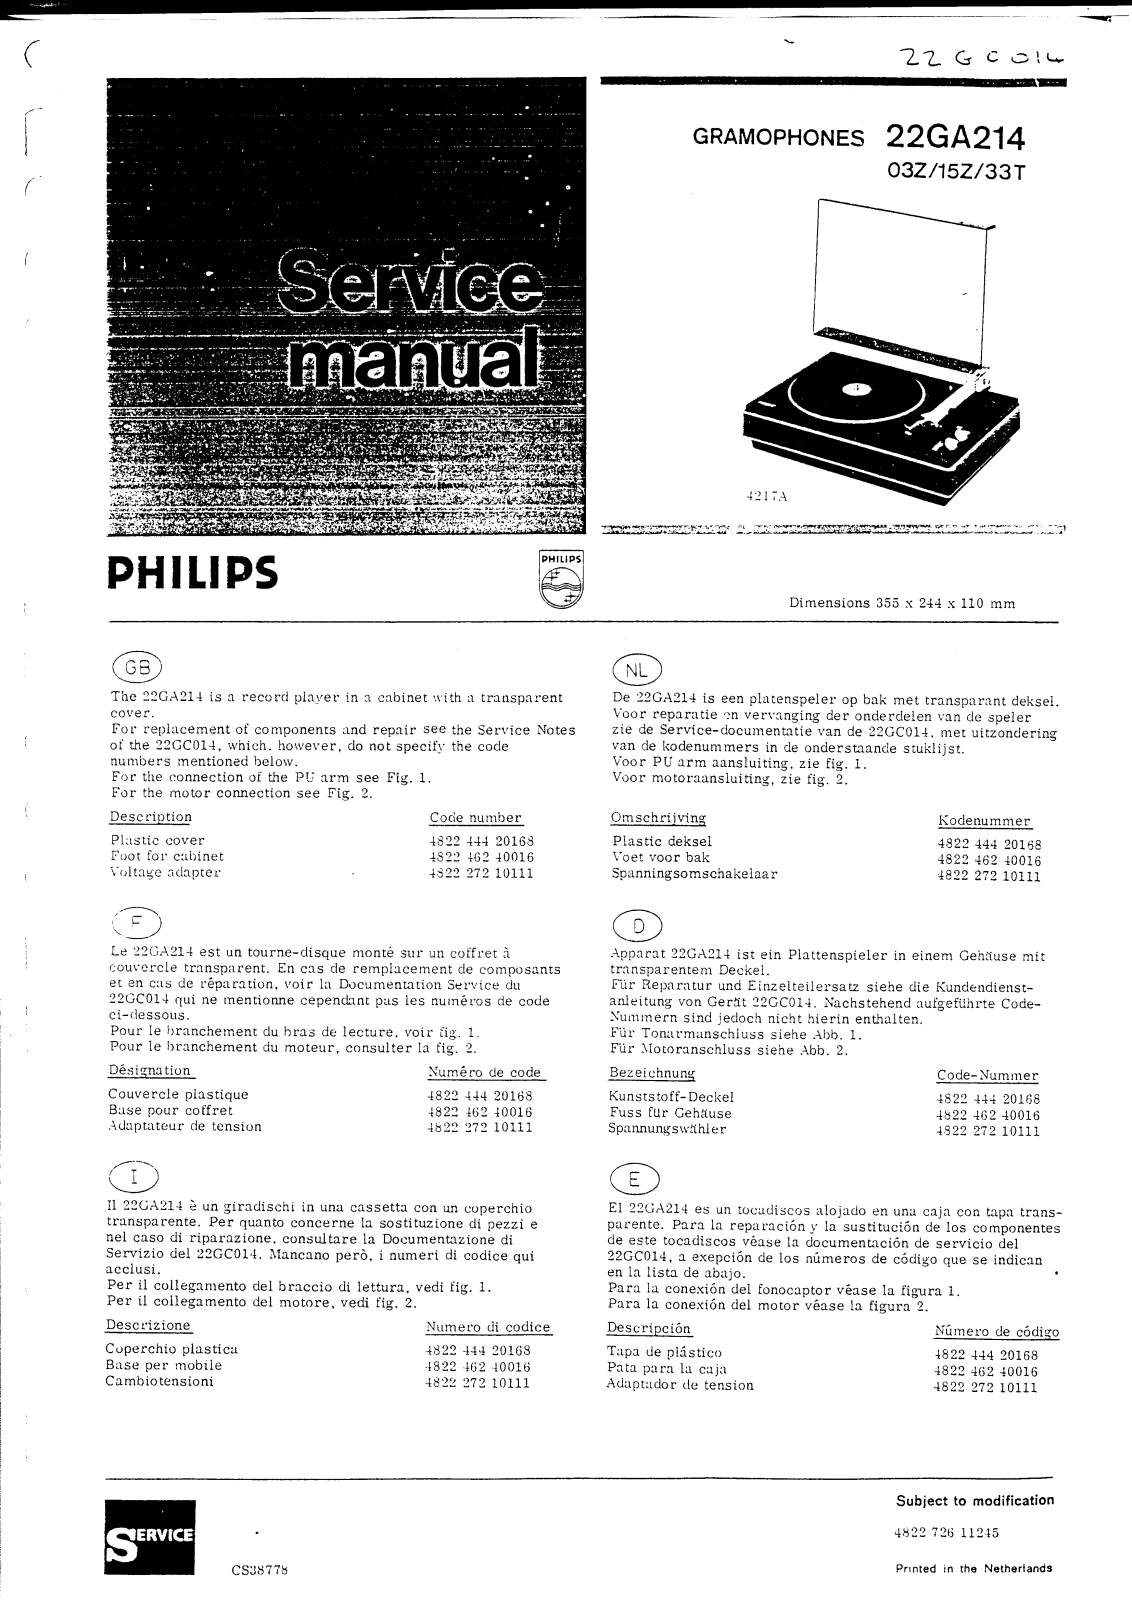 Philips GA-214 Service manual